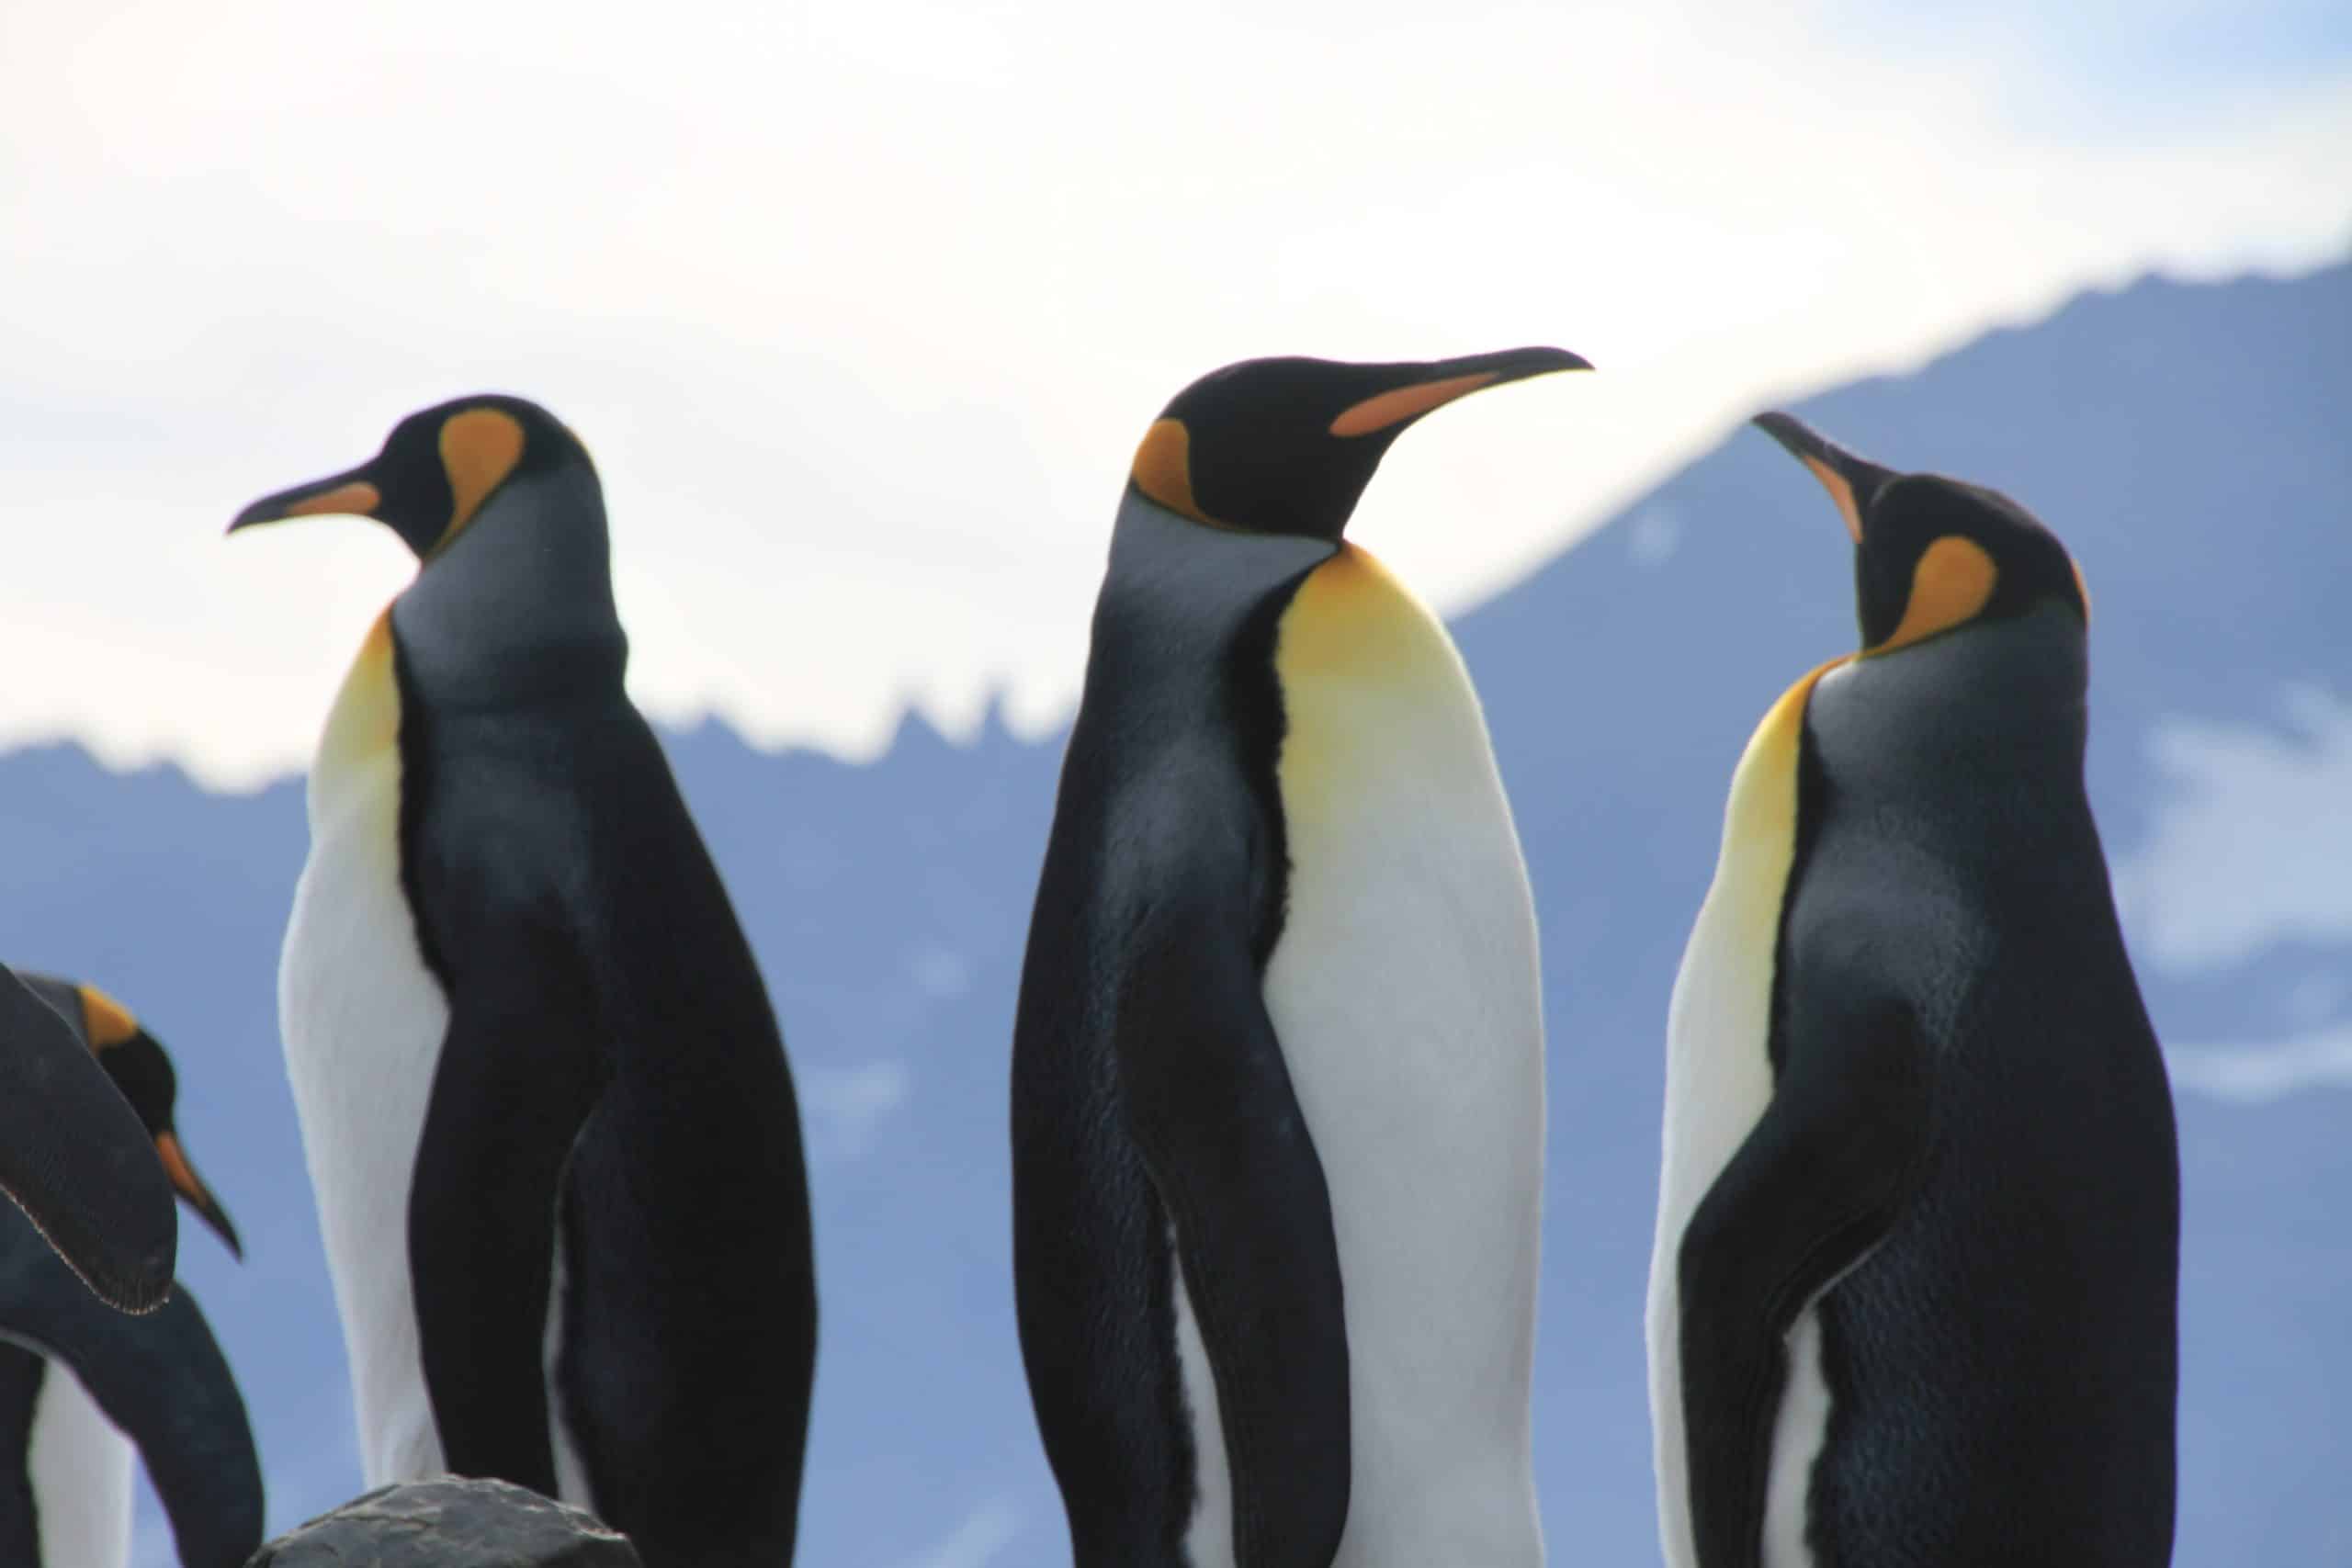 King Penguins standing tall